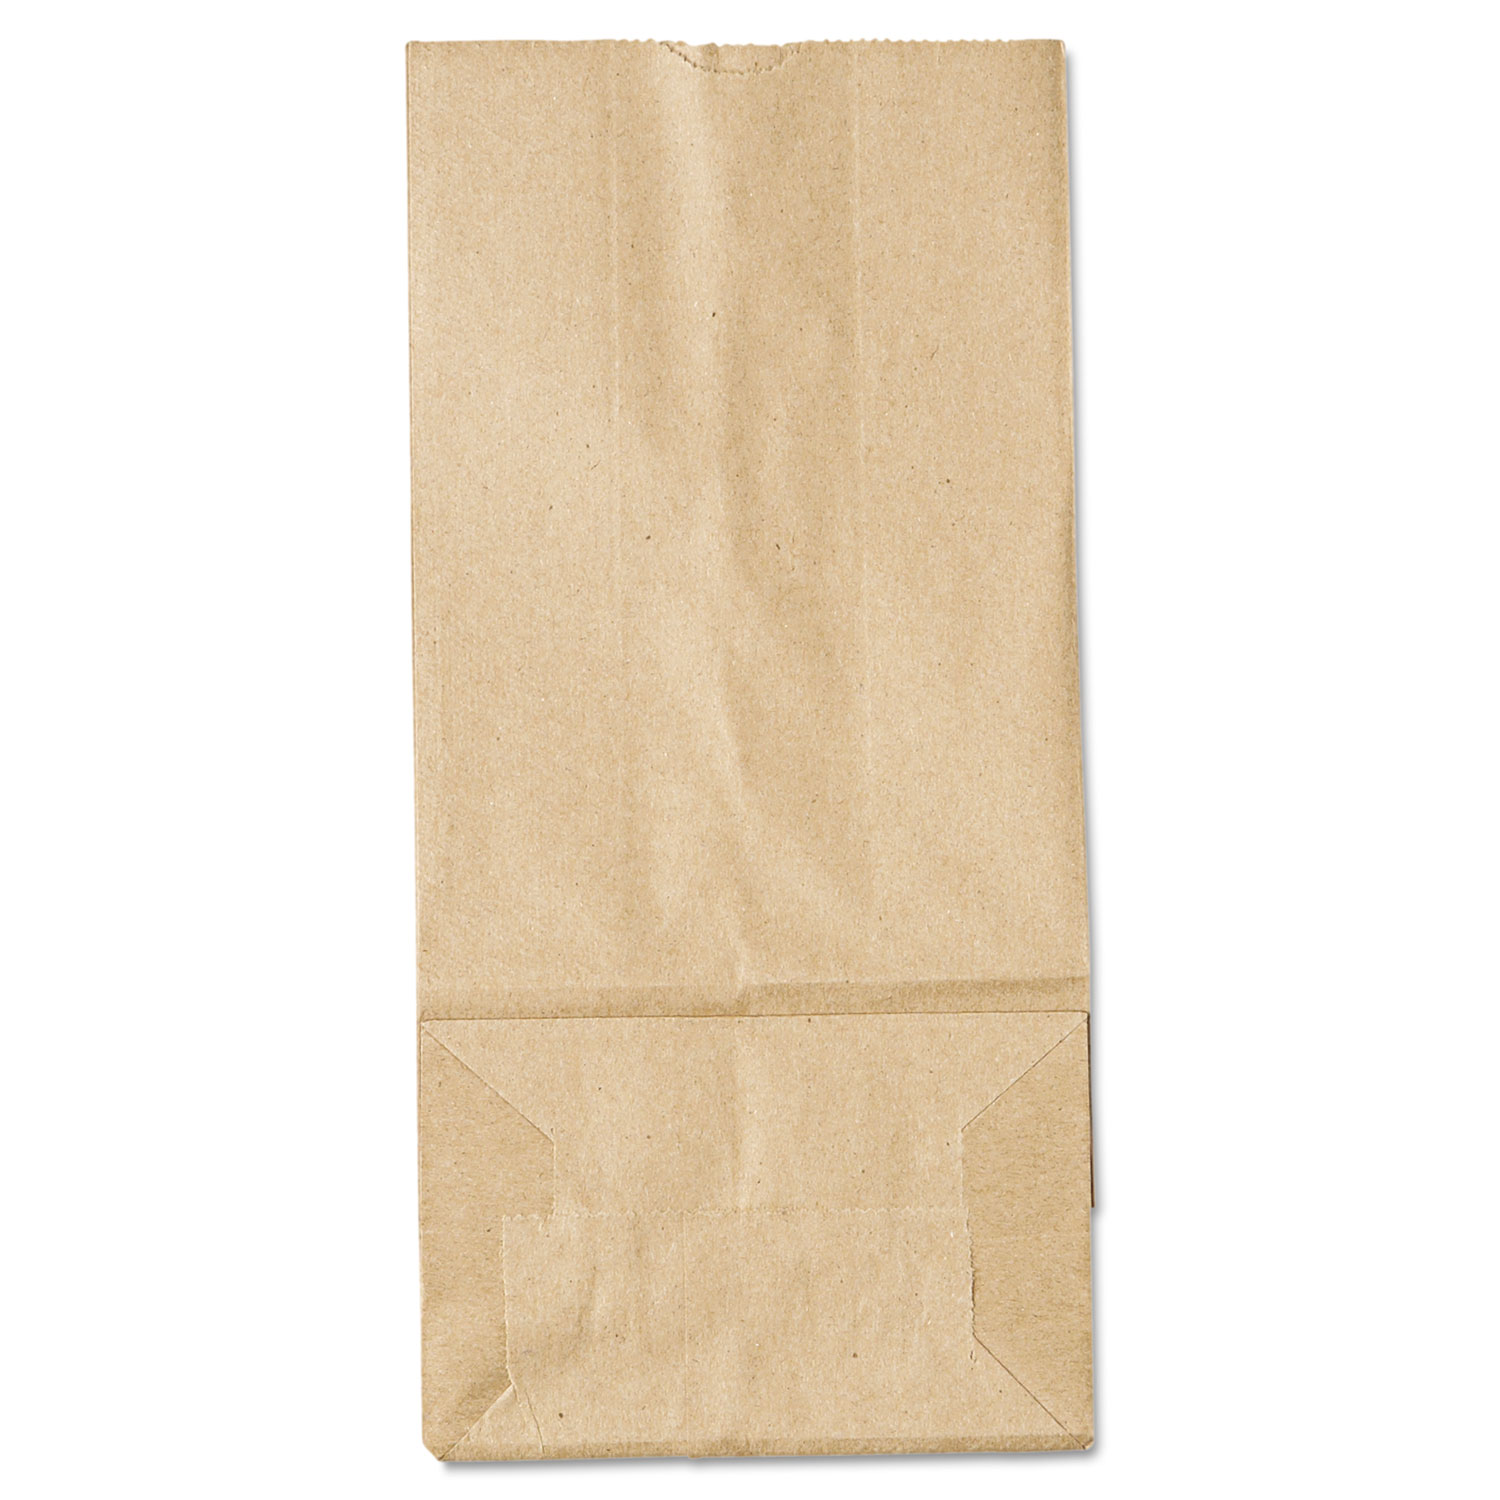  General 18405 Grocery Paper Bags, 35 lbs Capacity, #5, 5.25w x 3.44d x 10.94h, Kraft, 500 Bags (BAGGK5500) 